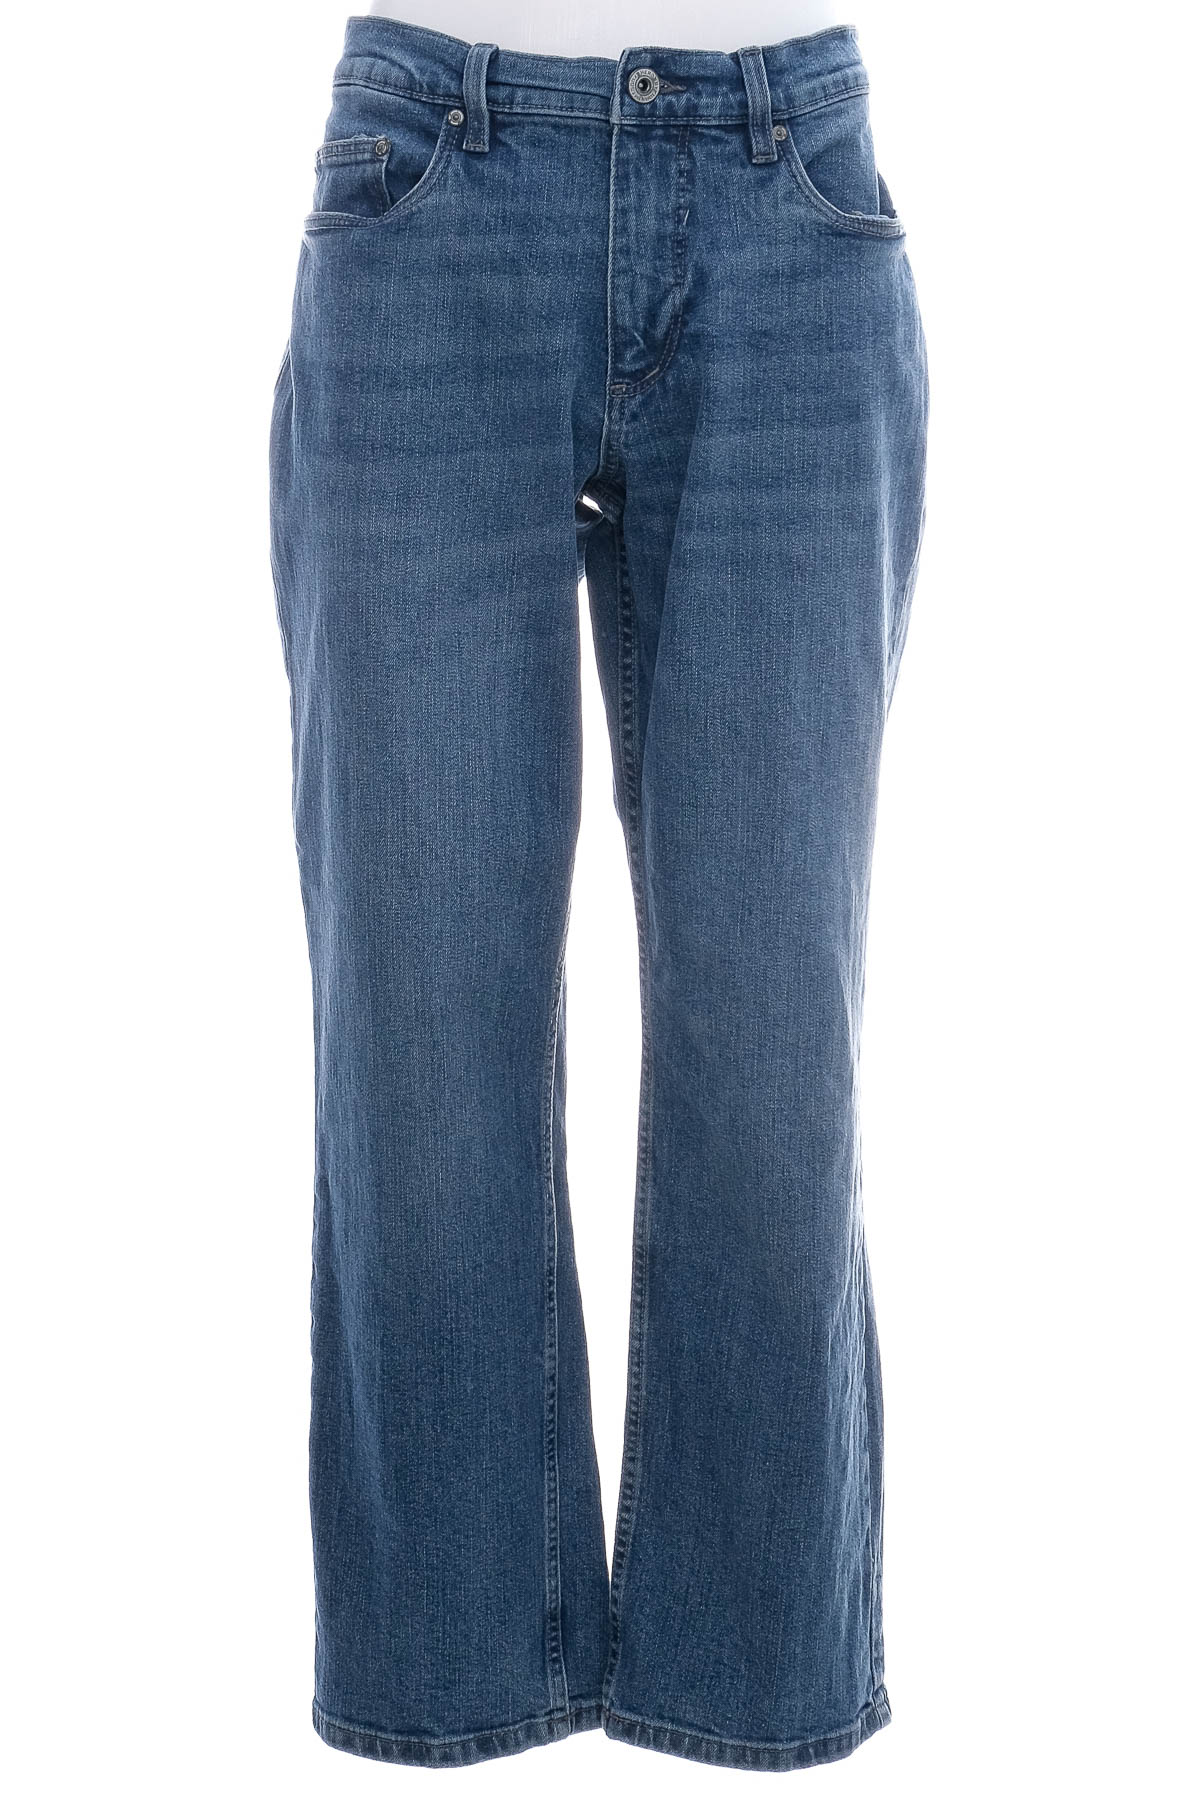 Jeans pentru bărbăți - HERO BY JOHN MEDOOX - 0